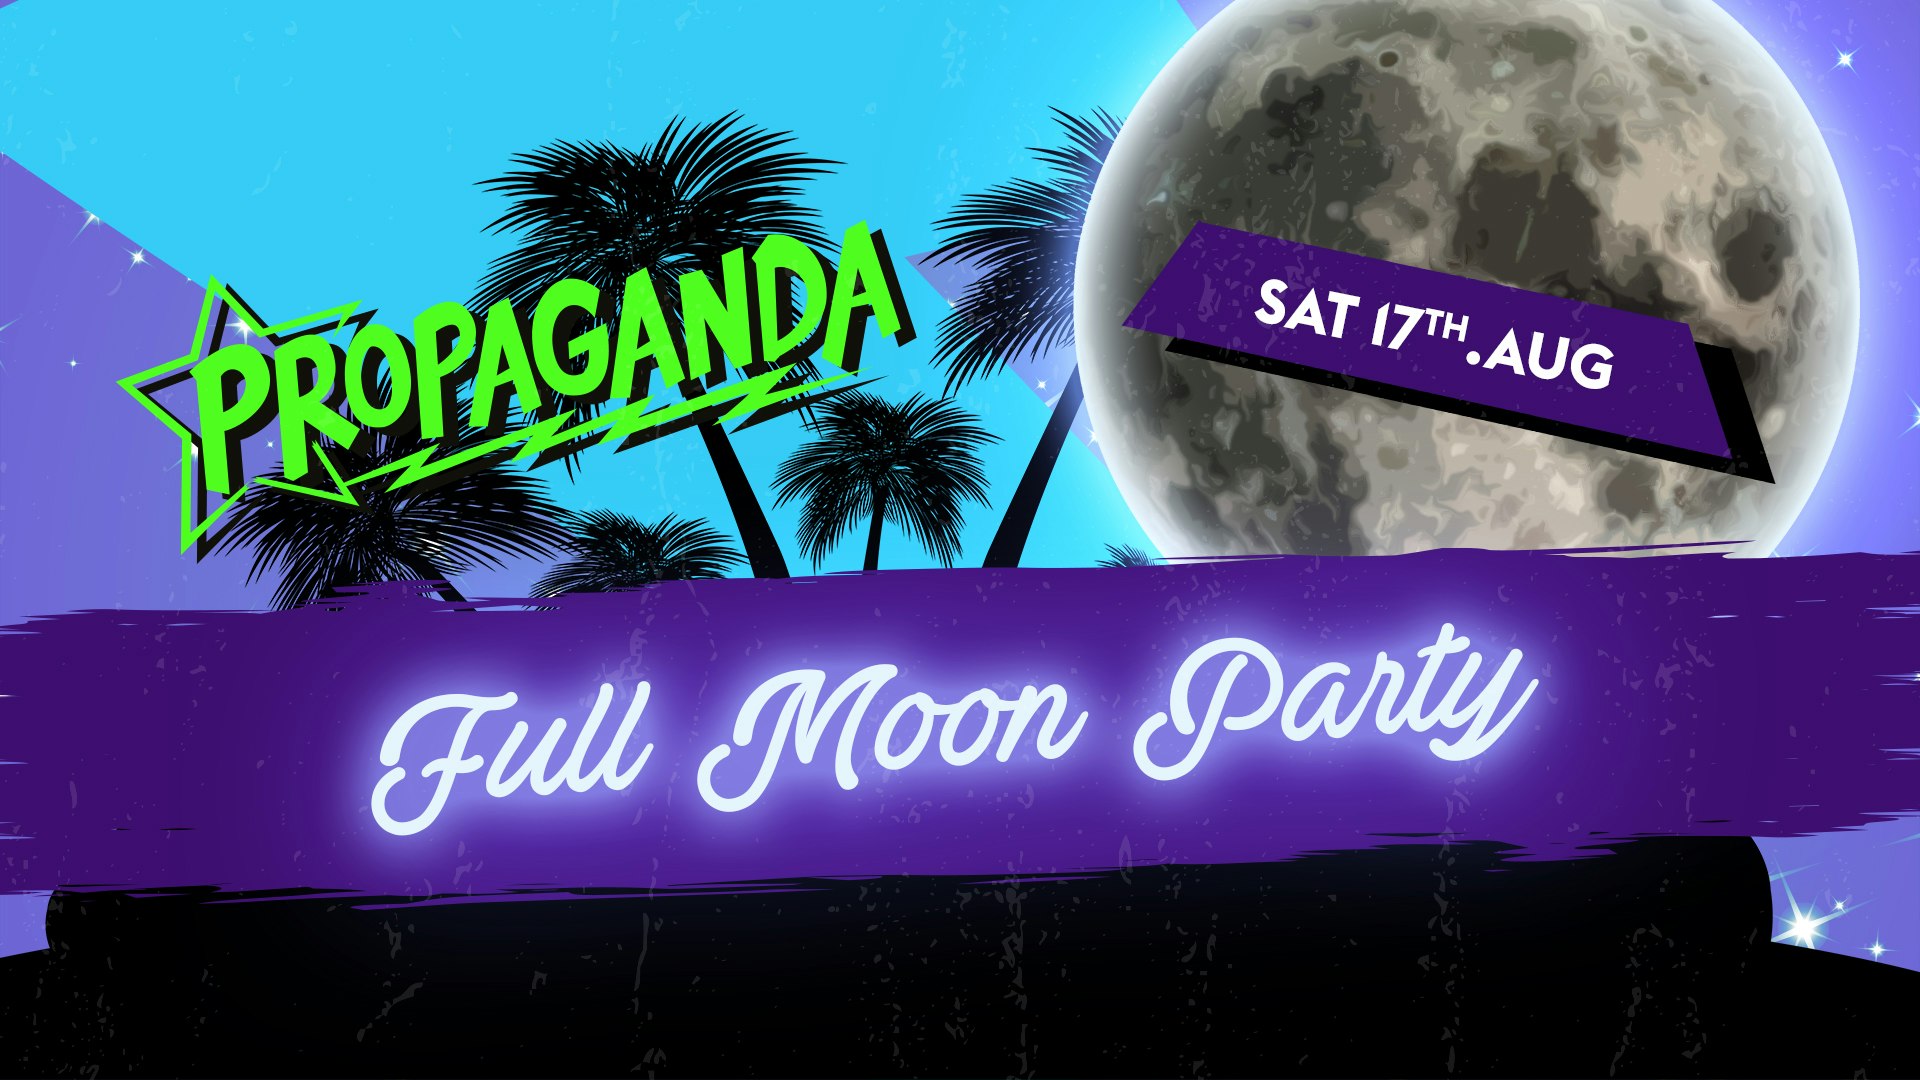 Propaganda London – Full Moon Party